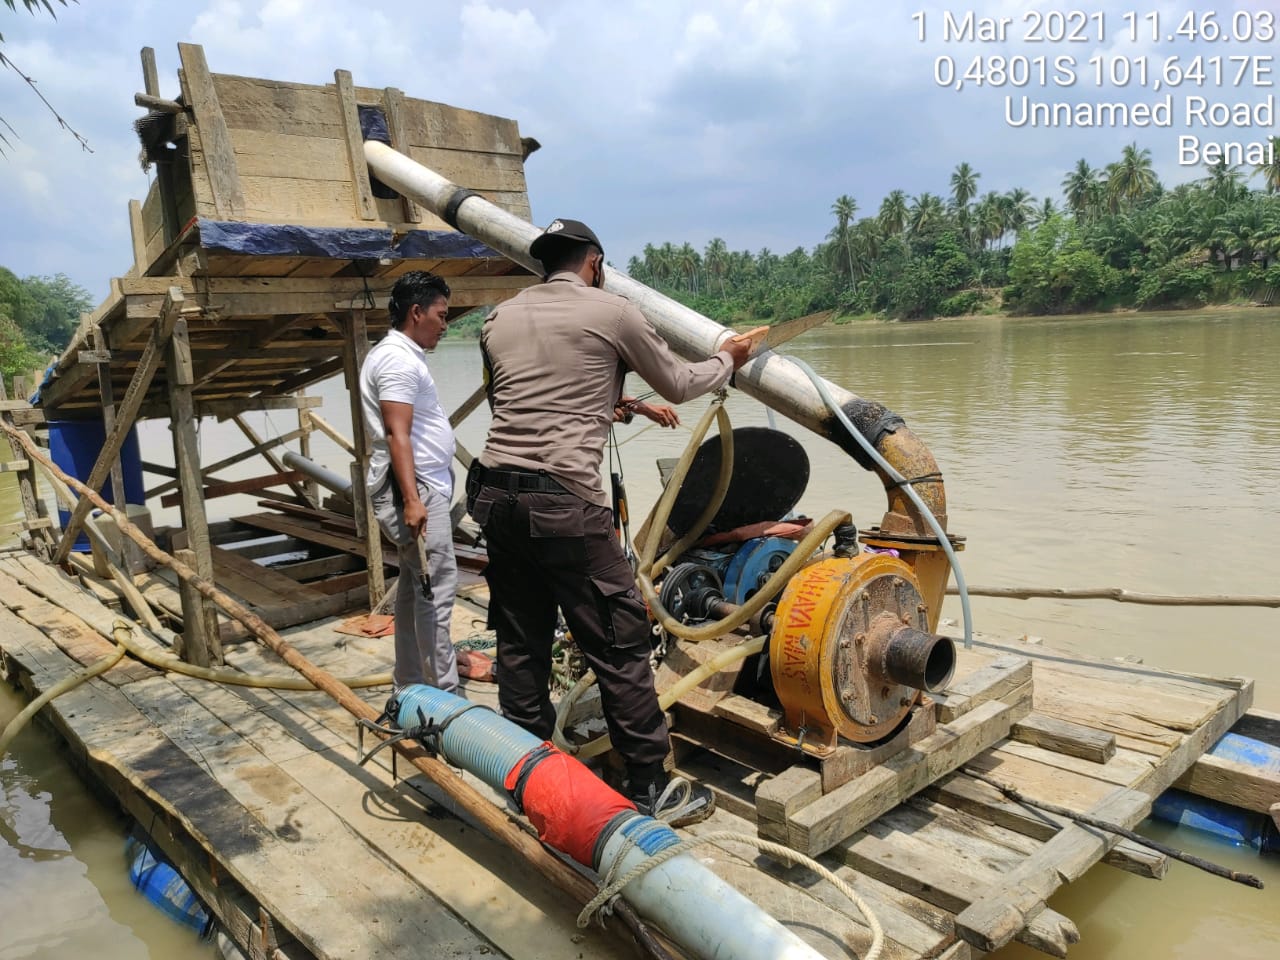 Patroli Rutin, Polsek Benai dan Pemerintah Desa kembali Temukan Dompeng di Aliran Sungai Batang Kuantan